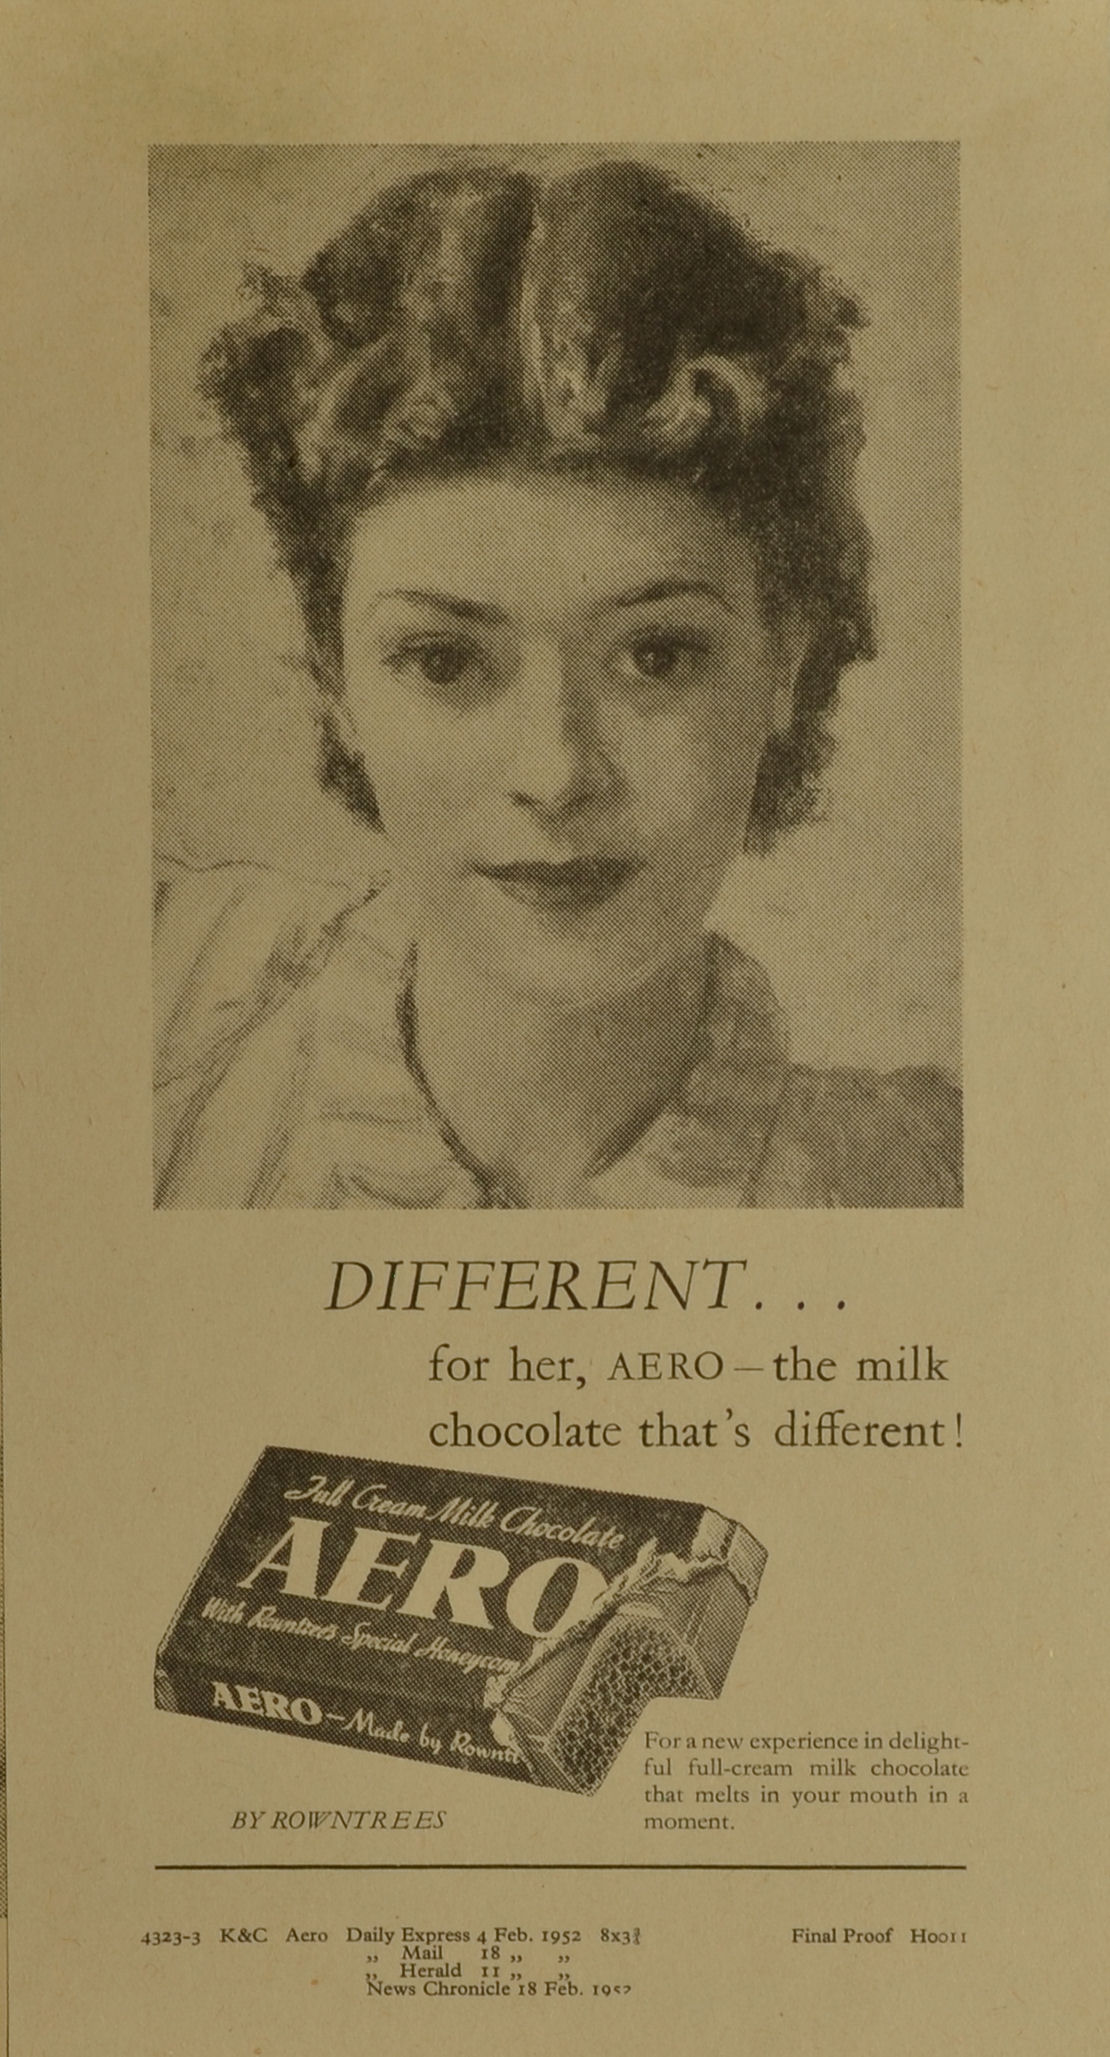 Image: Aero advert, 1952. Copyright Nestlé.